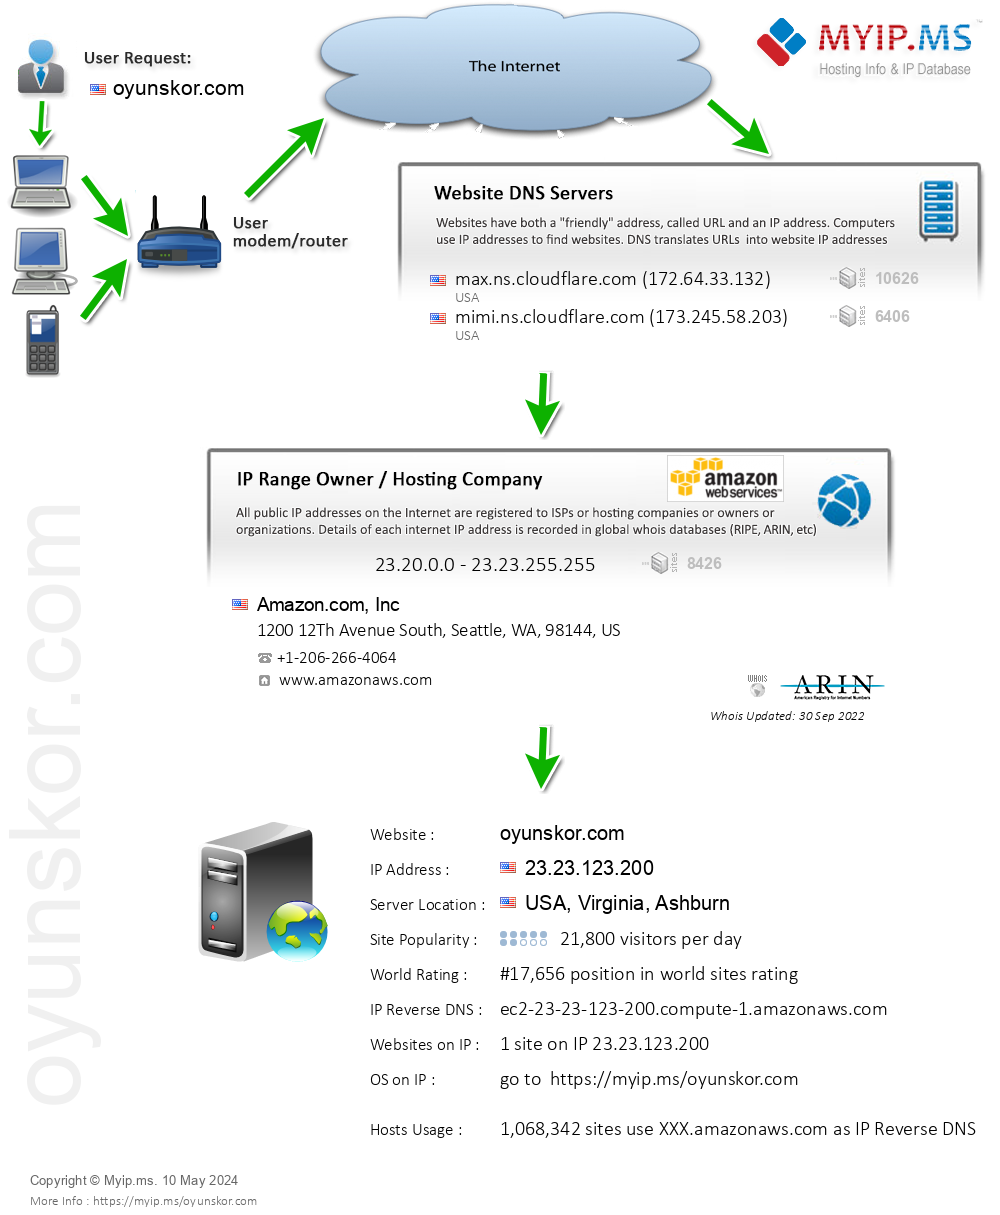 Oyunskor.com - Website Hosting Visual IP Diagram